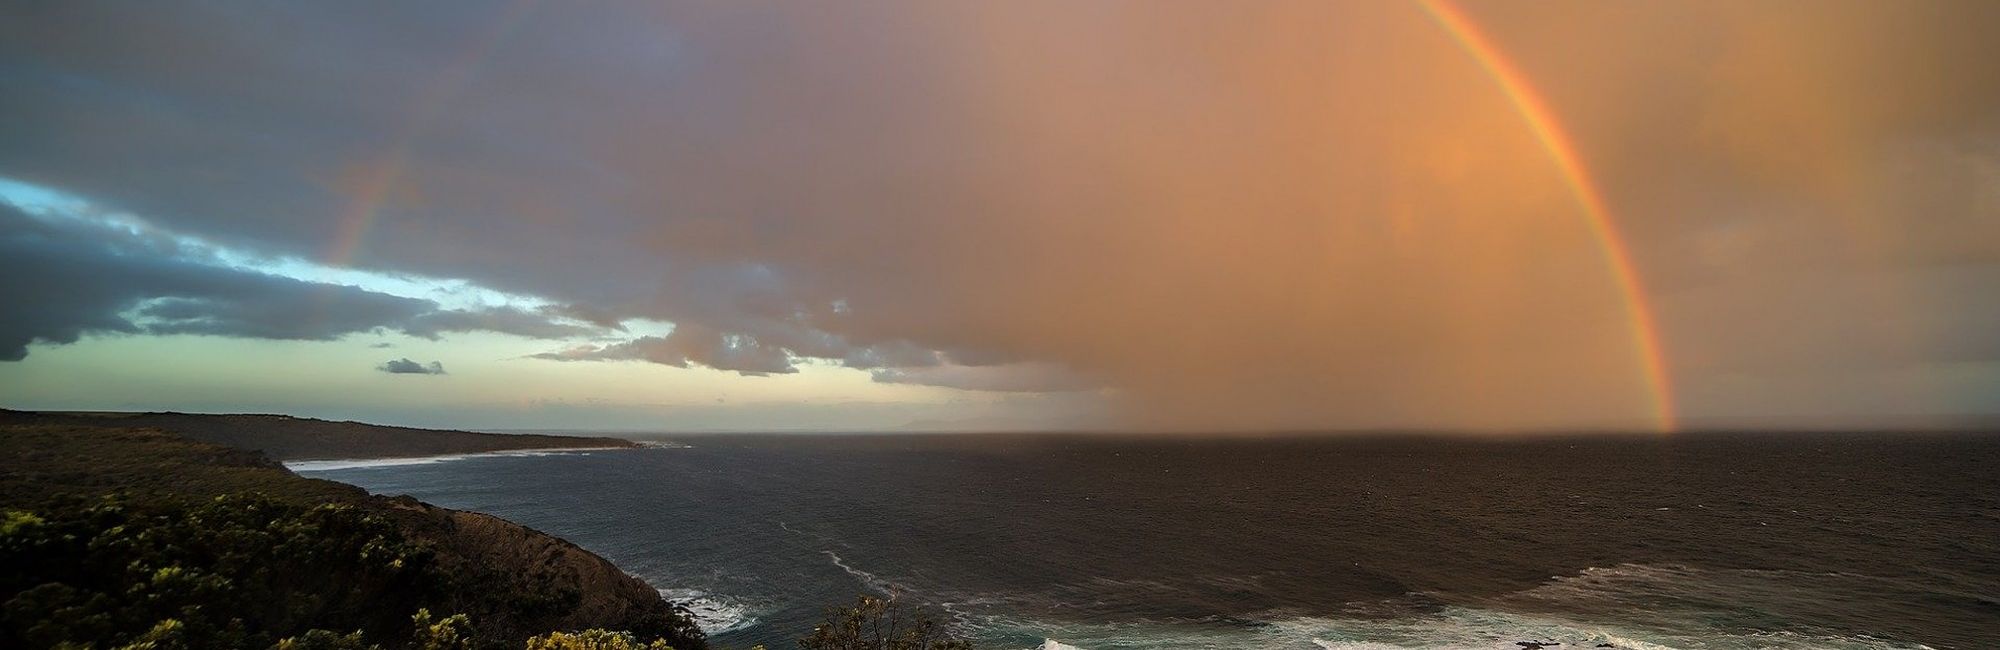 rainbow over stormy seas